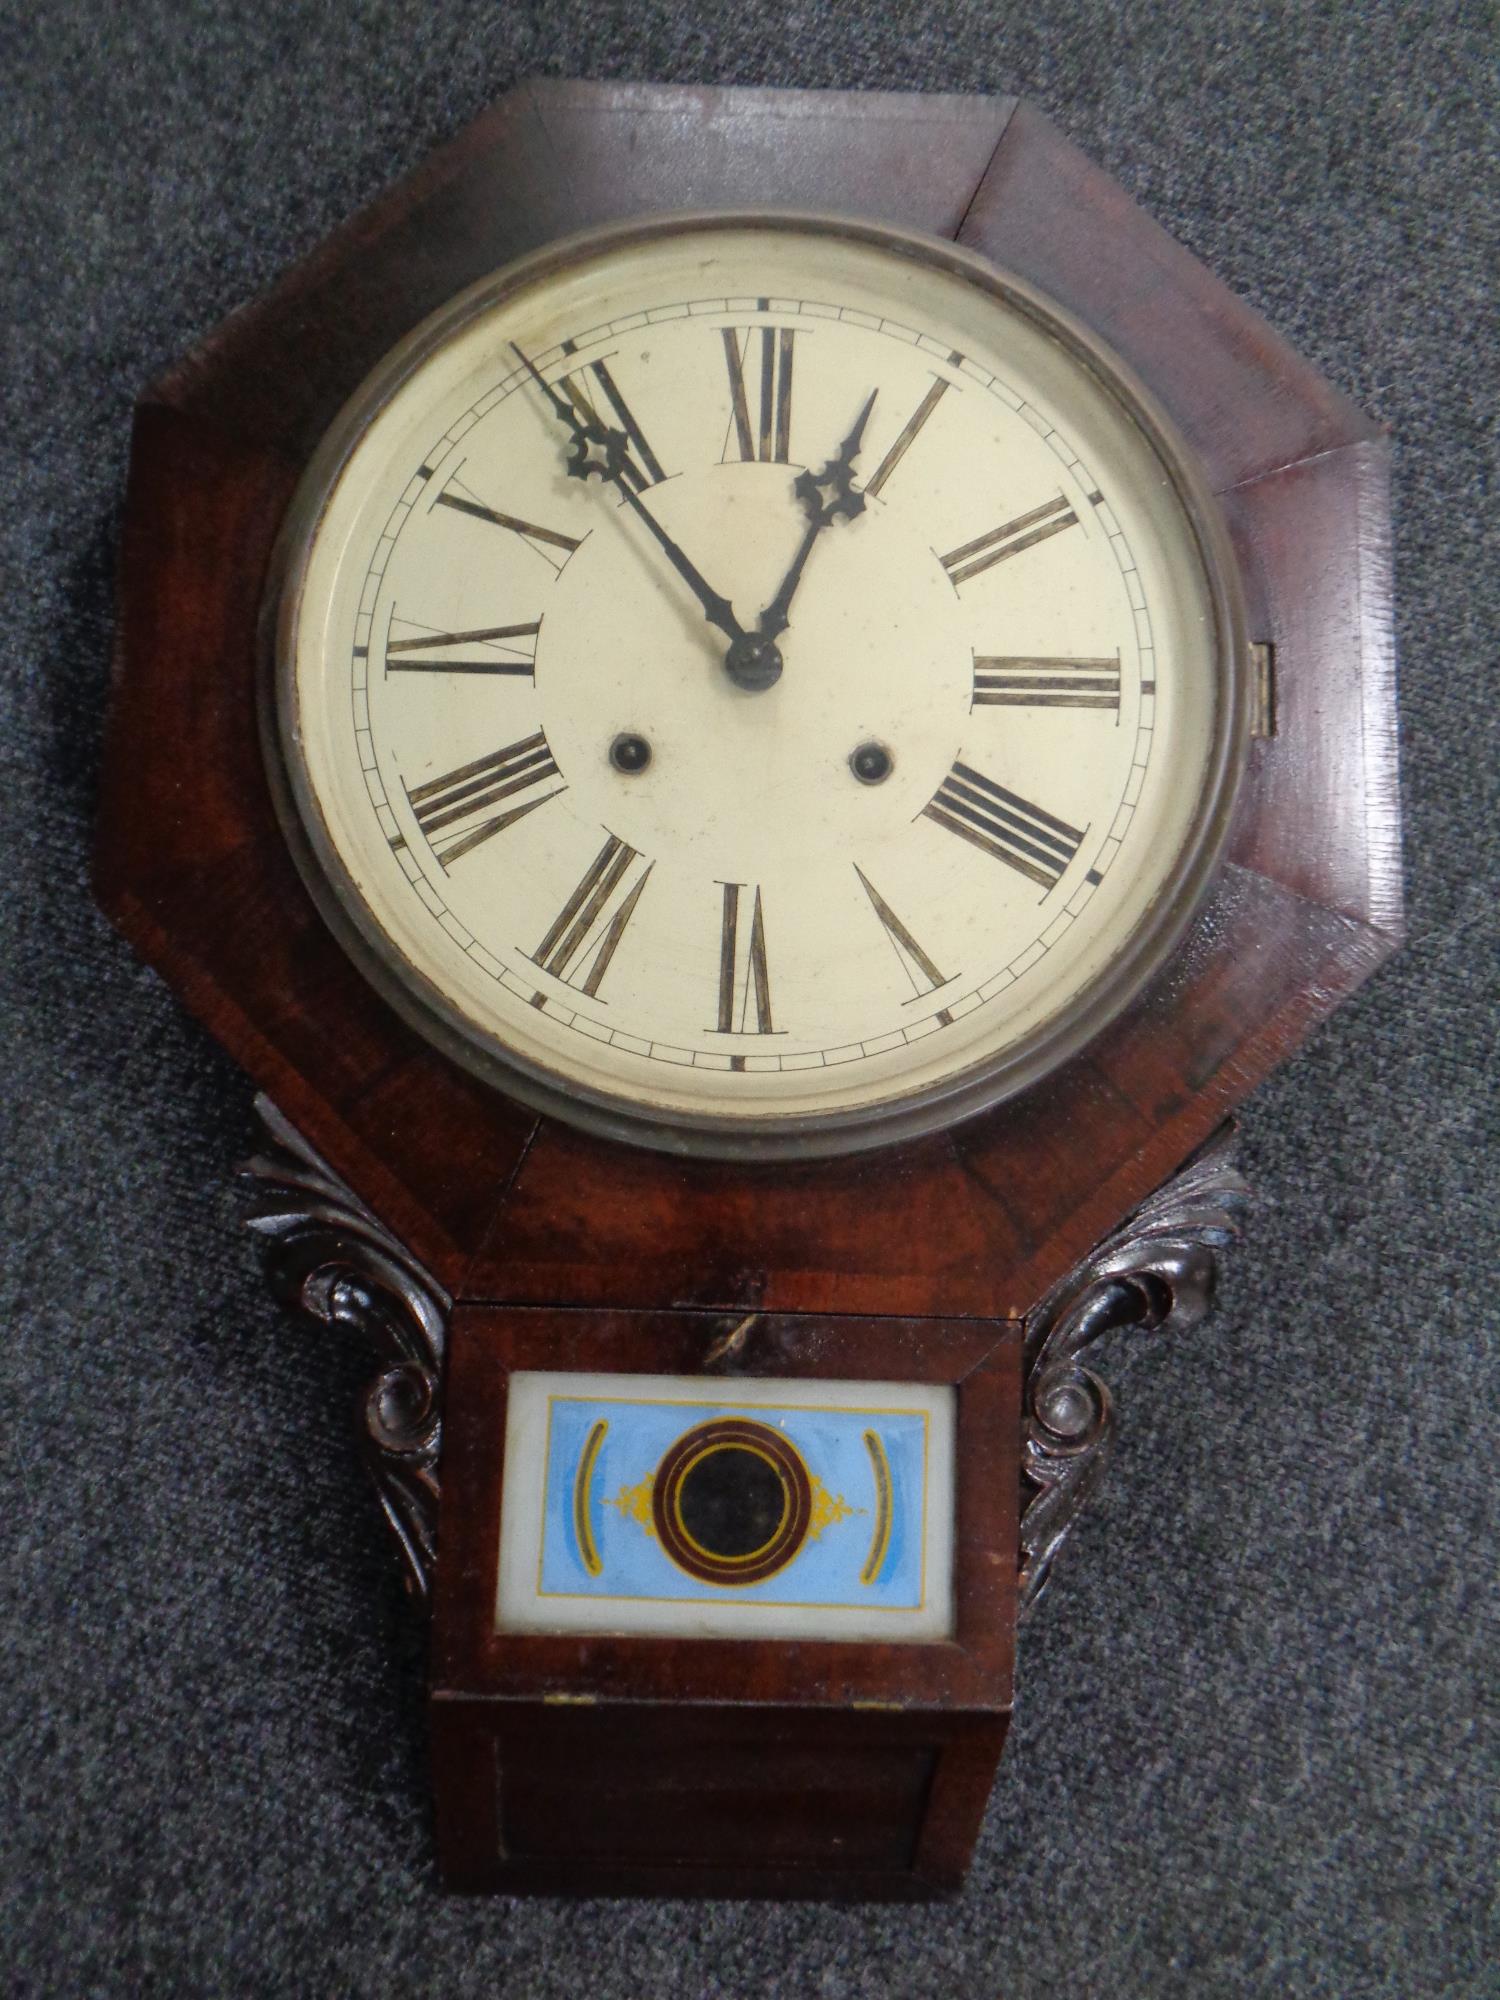 A 19th century American wall clock by the Waterbury Clock Company